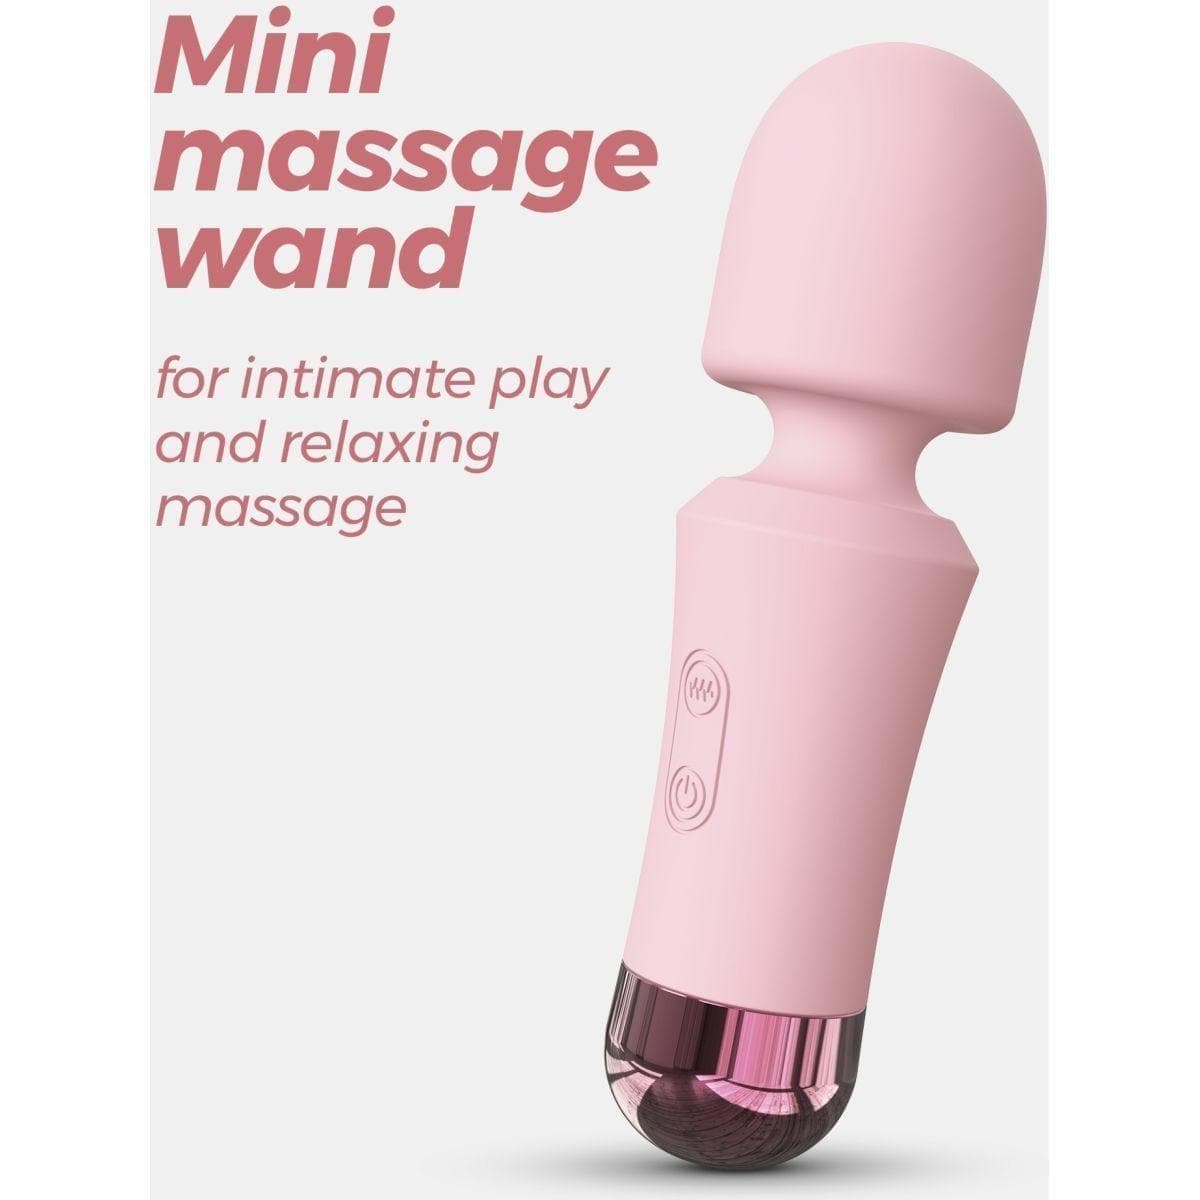 Massajador Mini Wanda USB, 12.5cm Ø3.6cm, 10vibrações